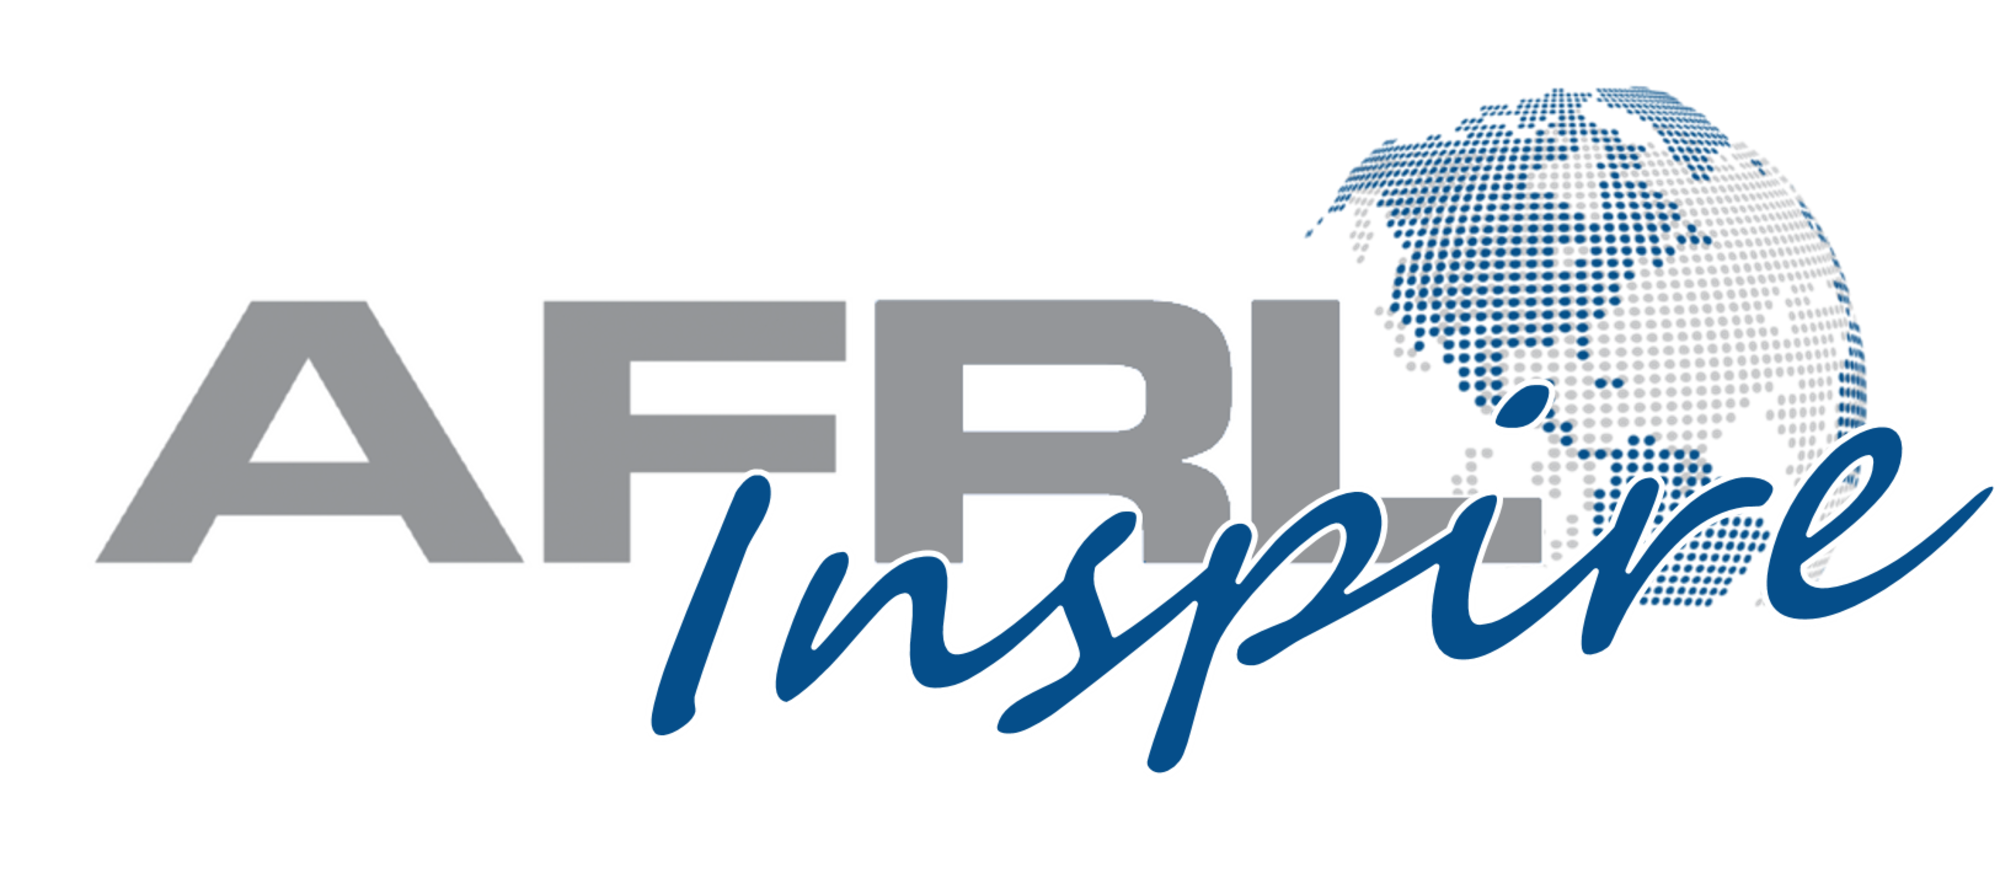 AFRL Inspire 2017 open to all Kirtland members